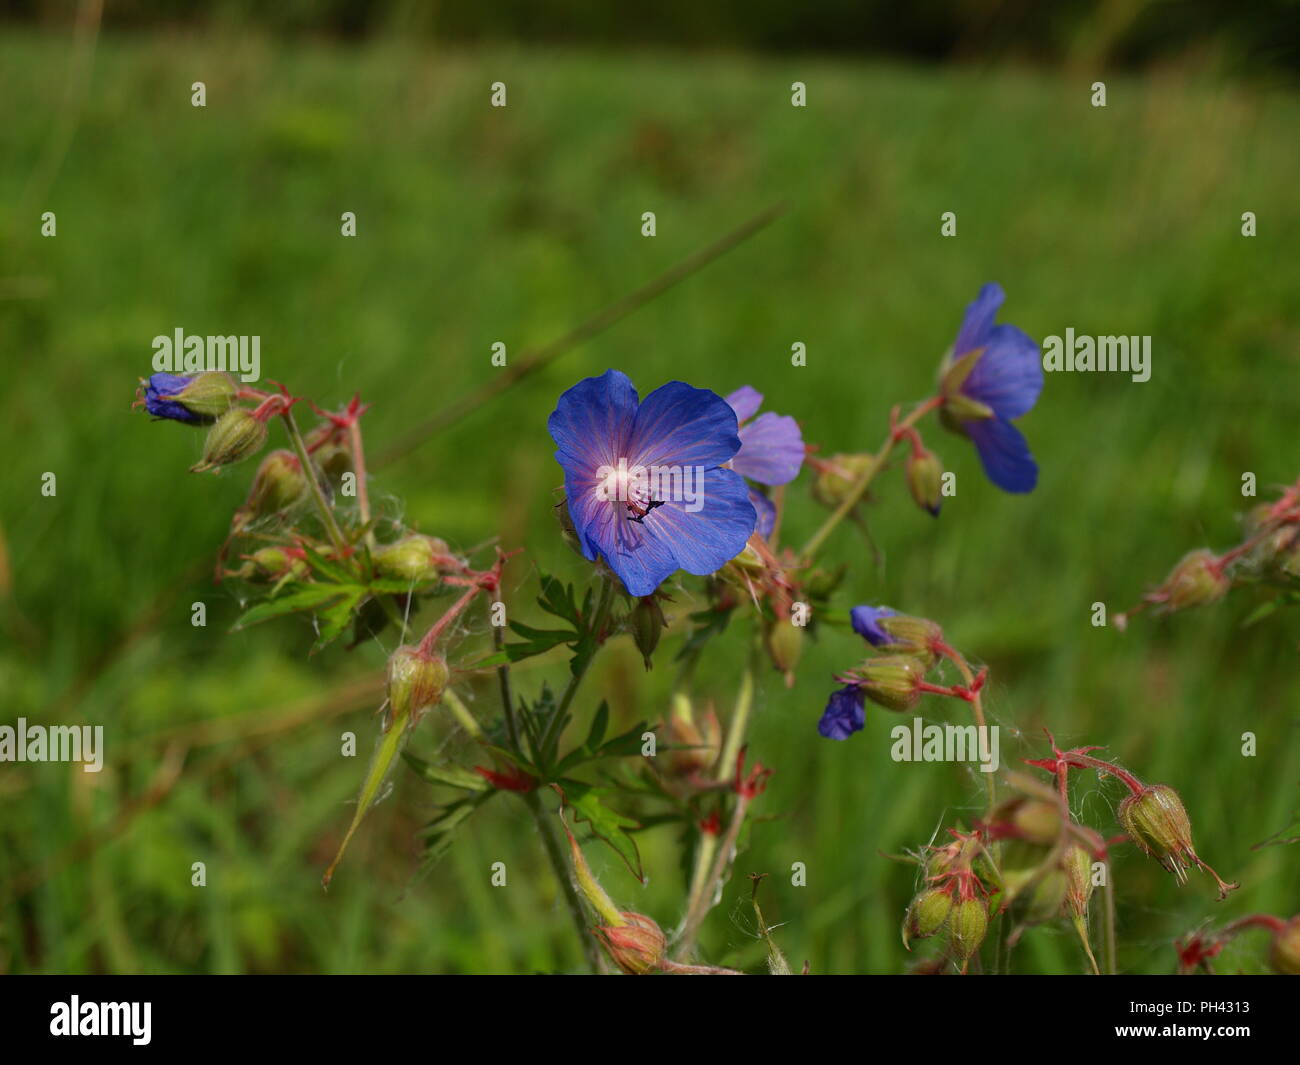 Blue purple wild flower / weed uk Stock Photo